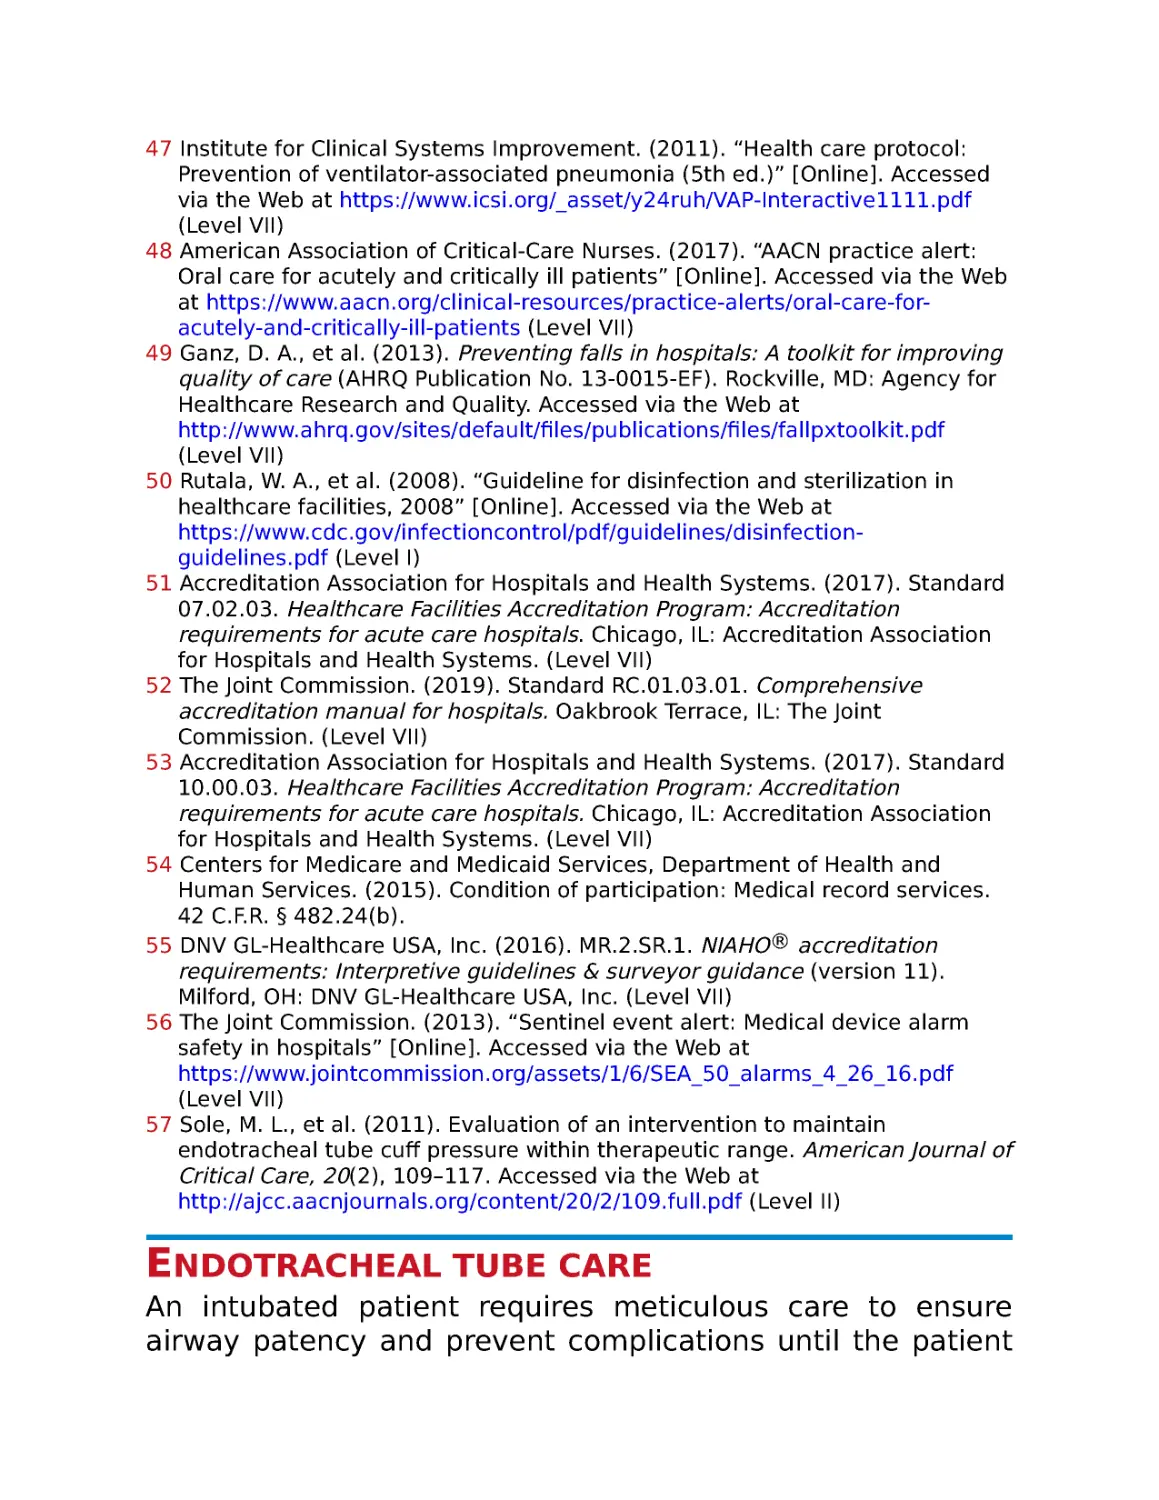 Endotracheal tube care